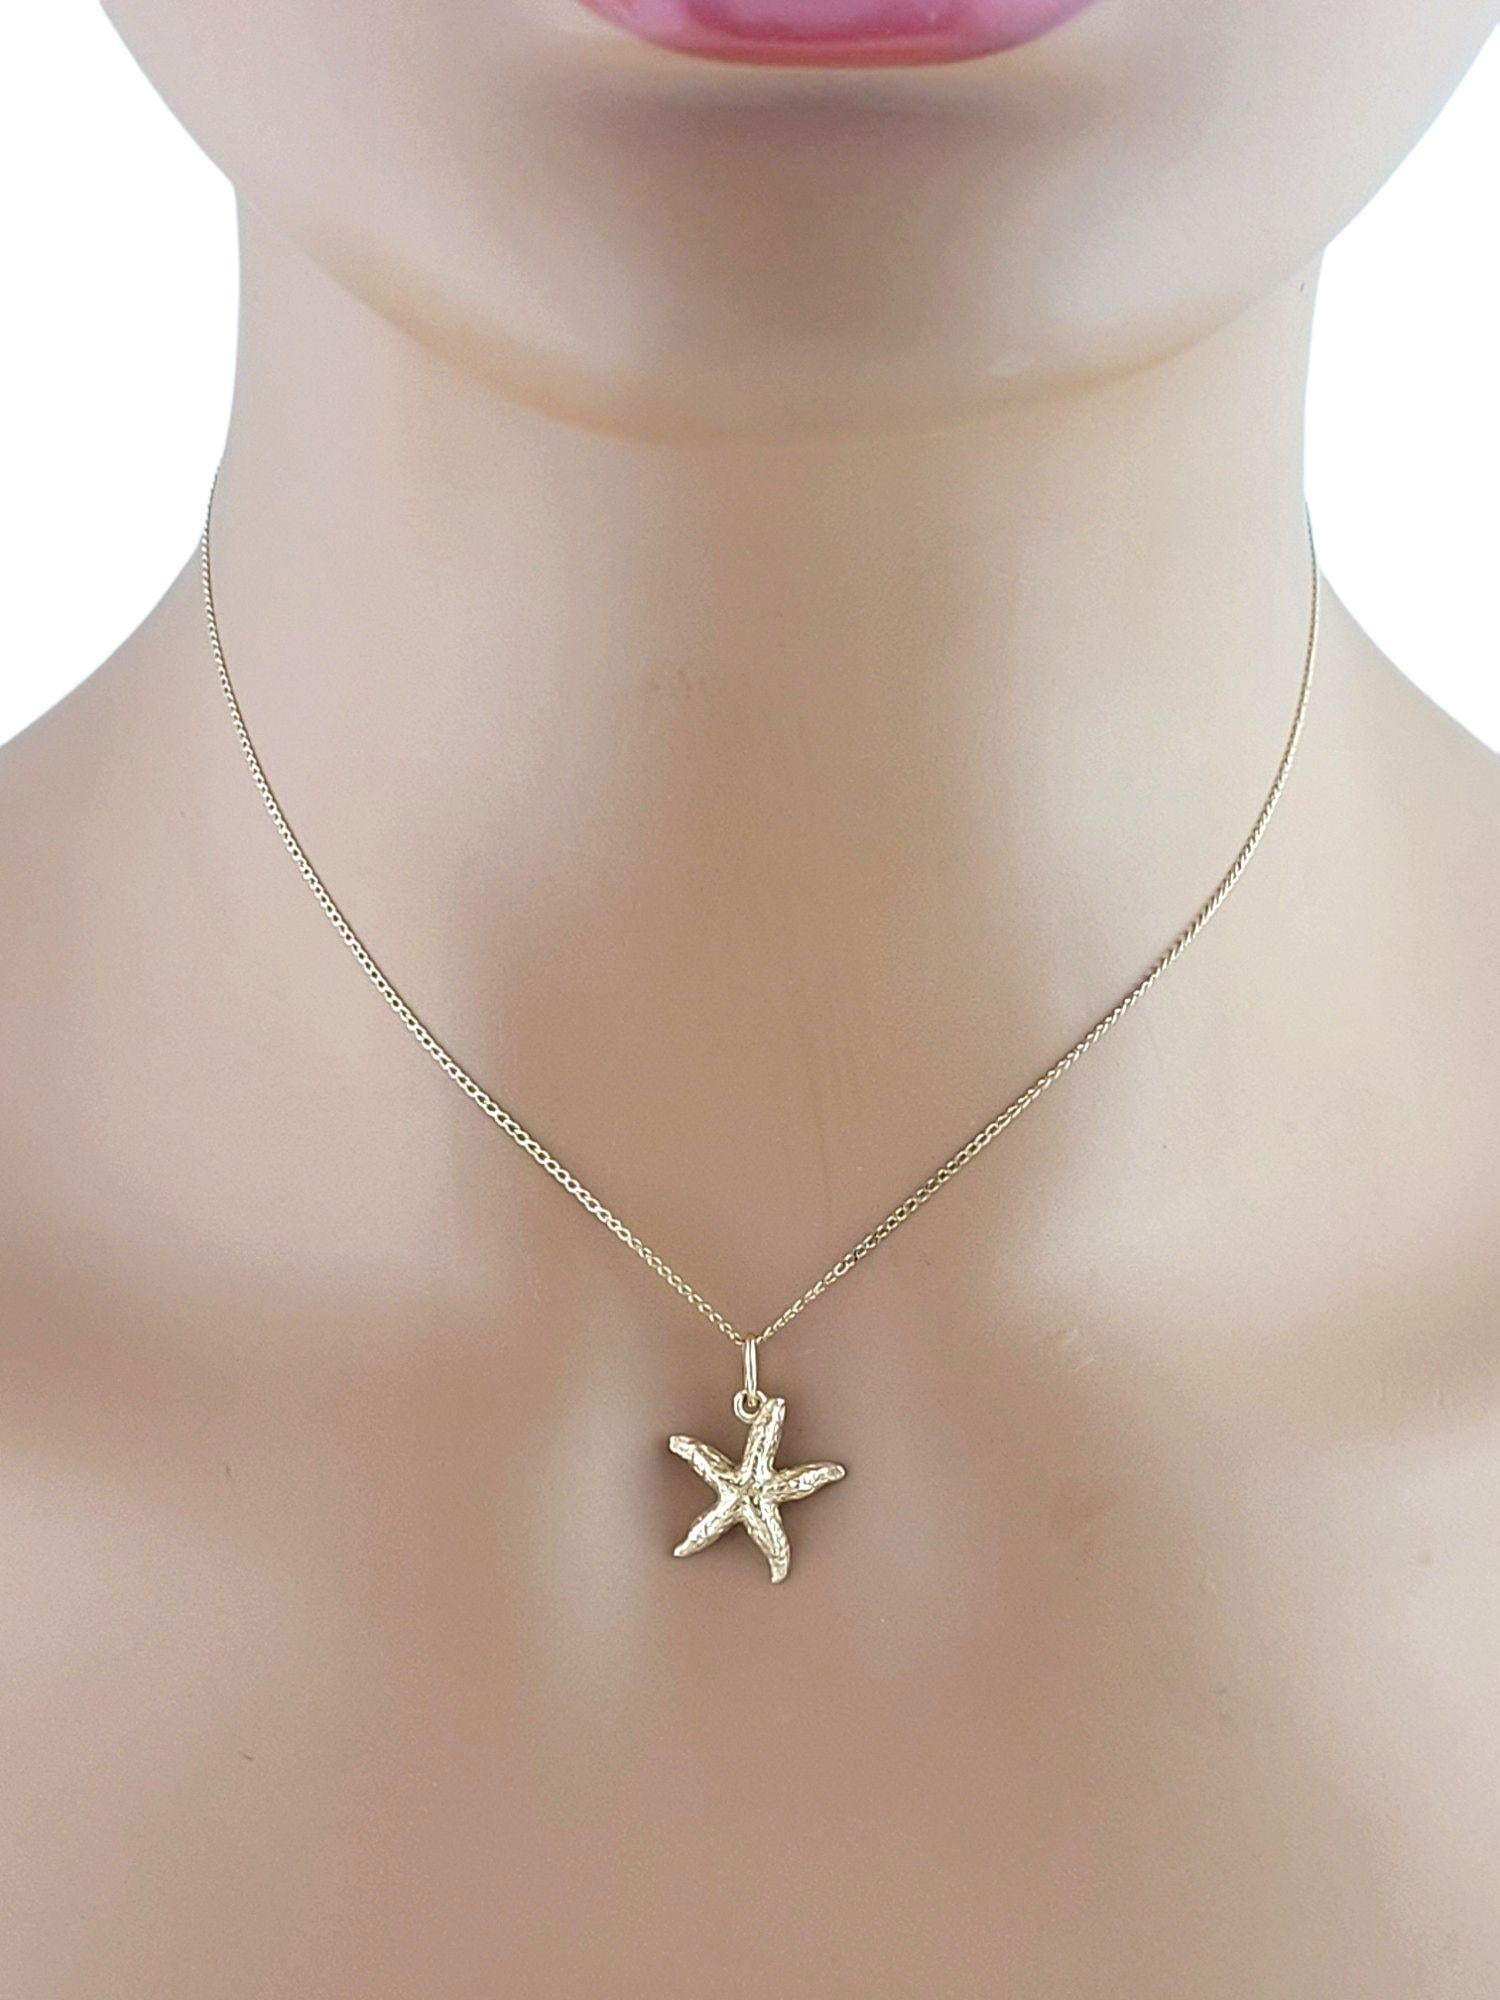 14K Yellow Gold Starfish Sea Star Charm #14867 For Sale 2